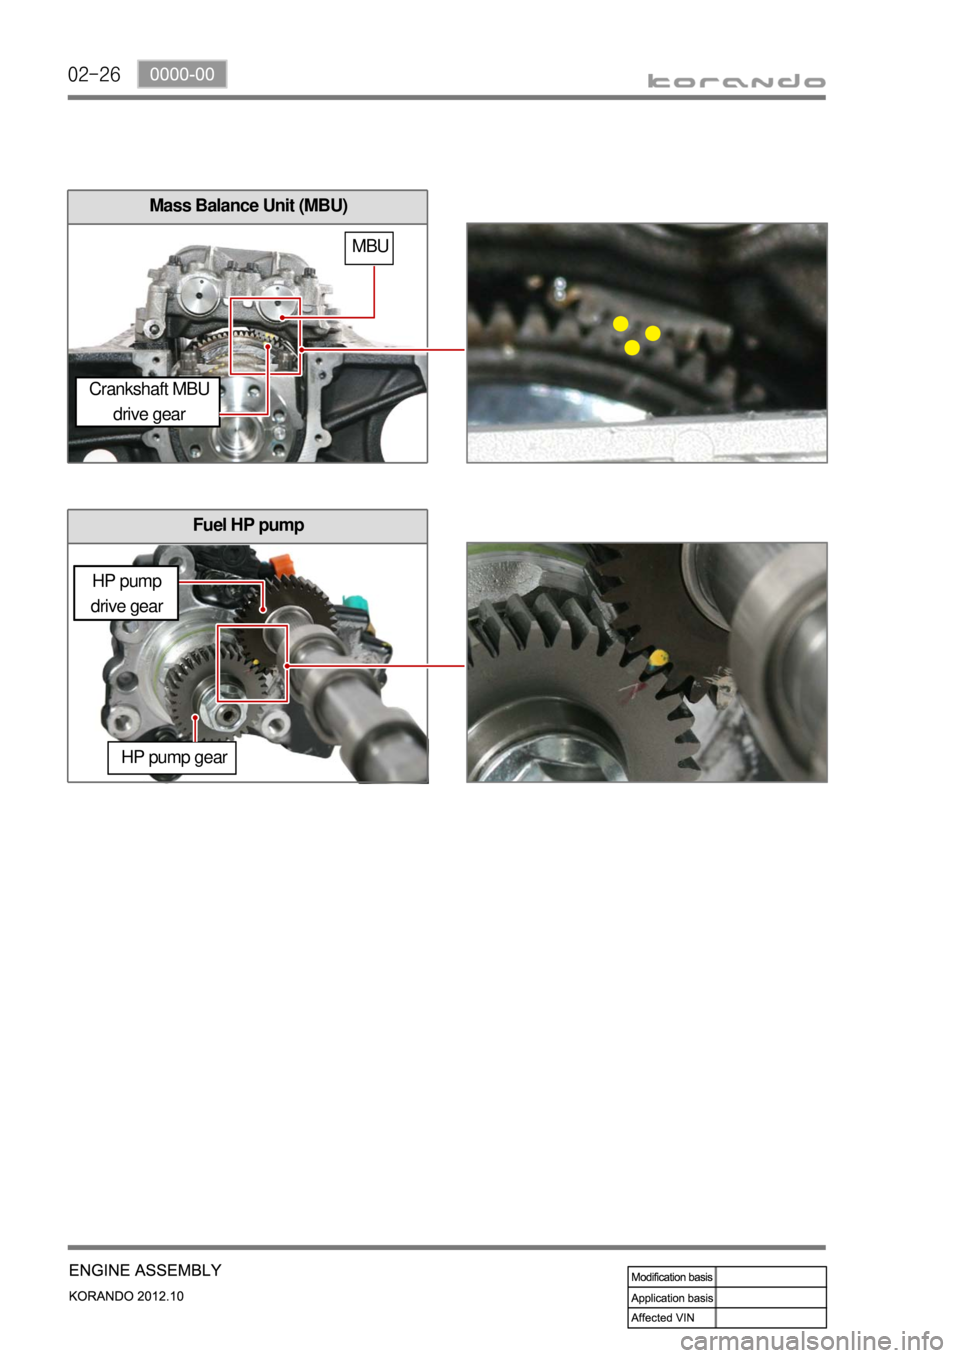 SSANGYONG KORANDO 2012  Service Manual 02-26
Mass Balance Unit (MBU)
Fuel HP pump
HP pump gear
Crankshaft MBU 
drive gear
MBU
HP pump 
drive gear 